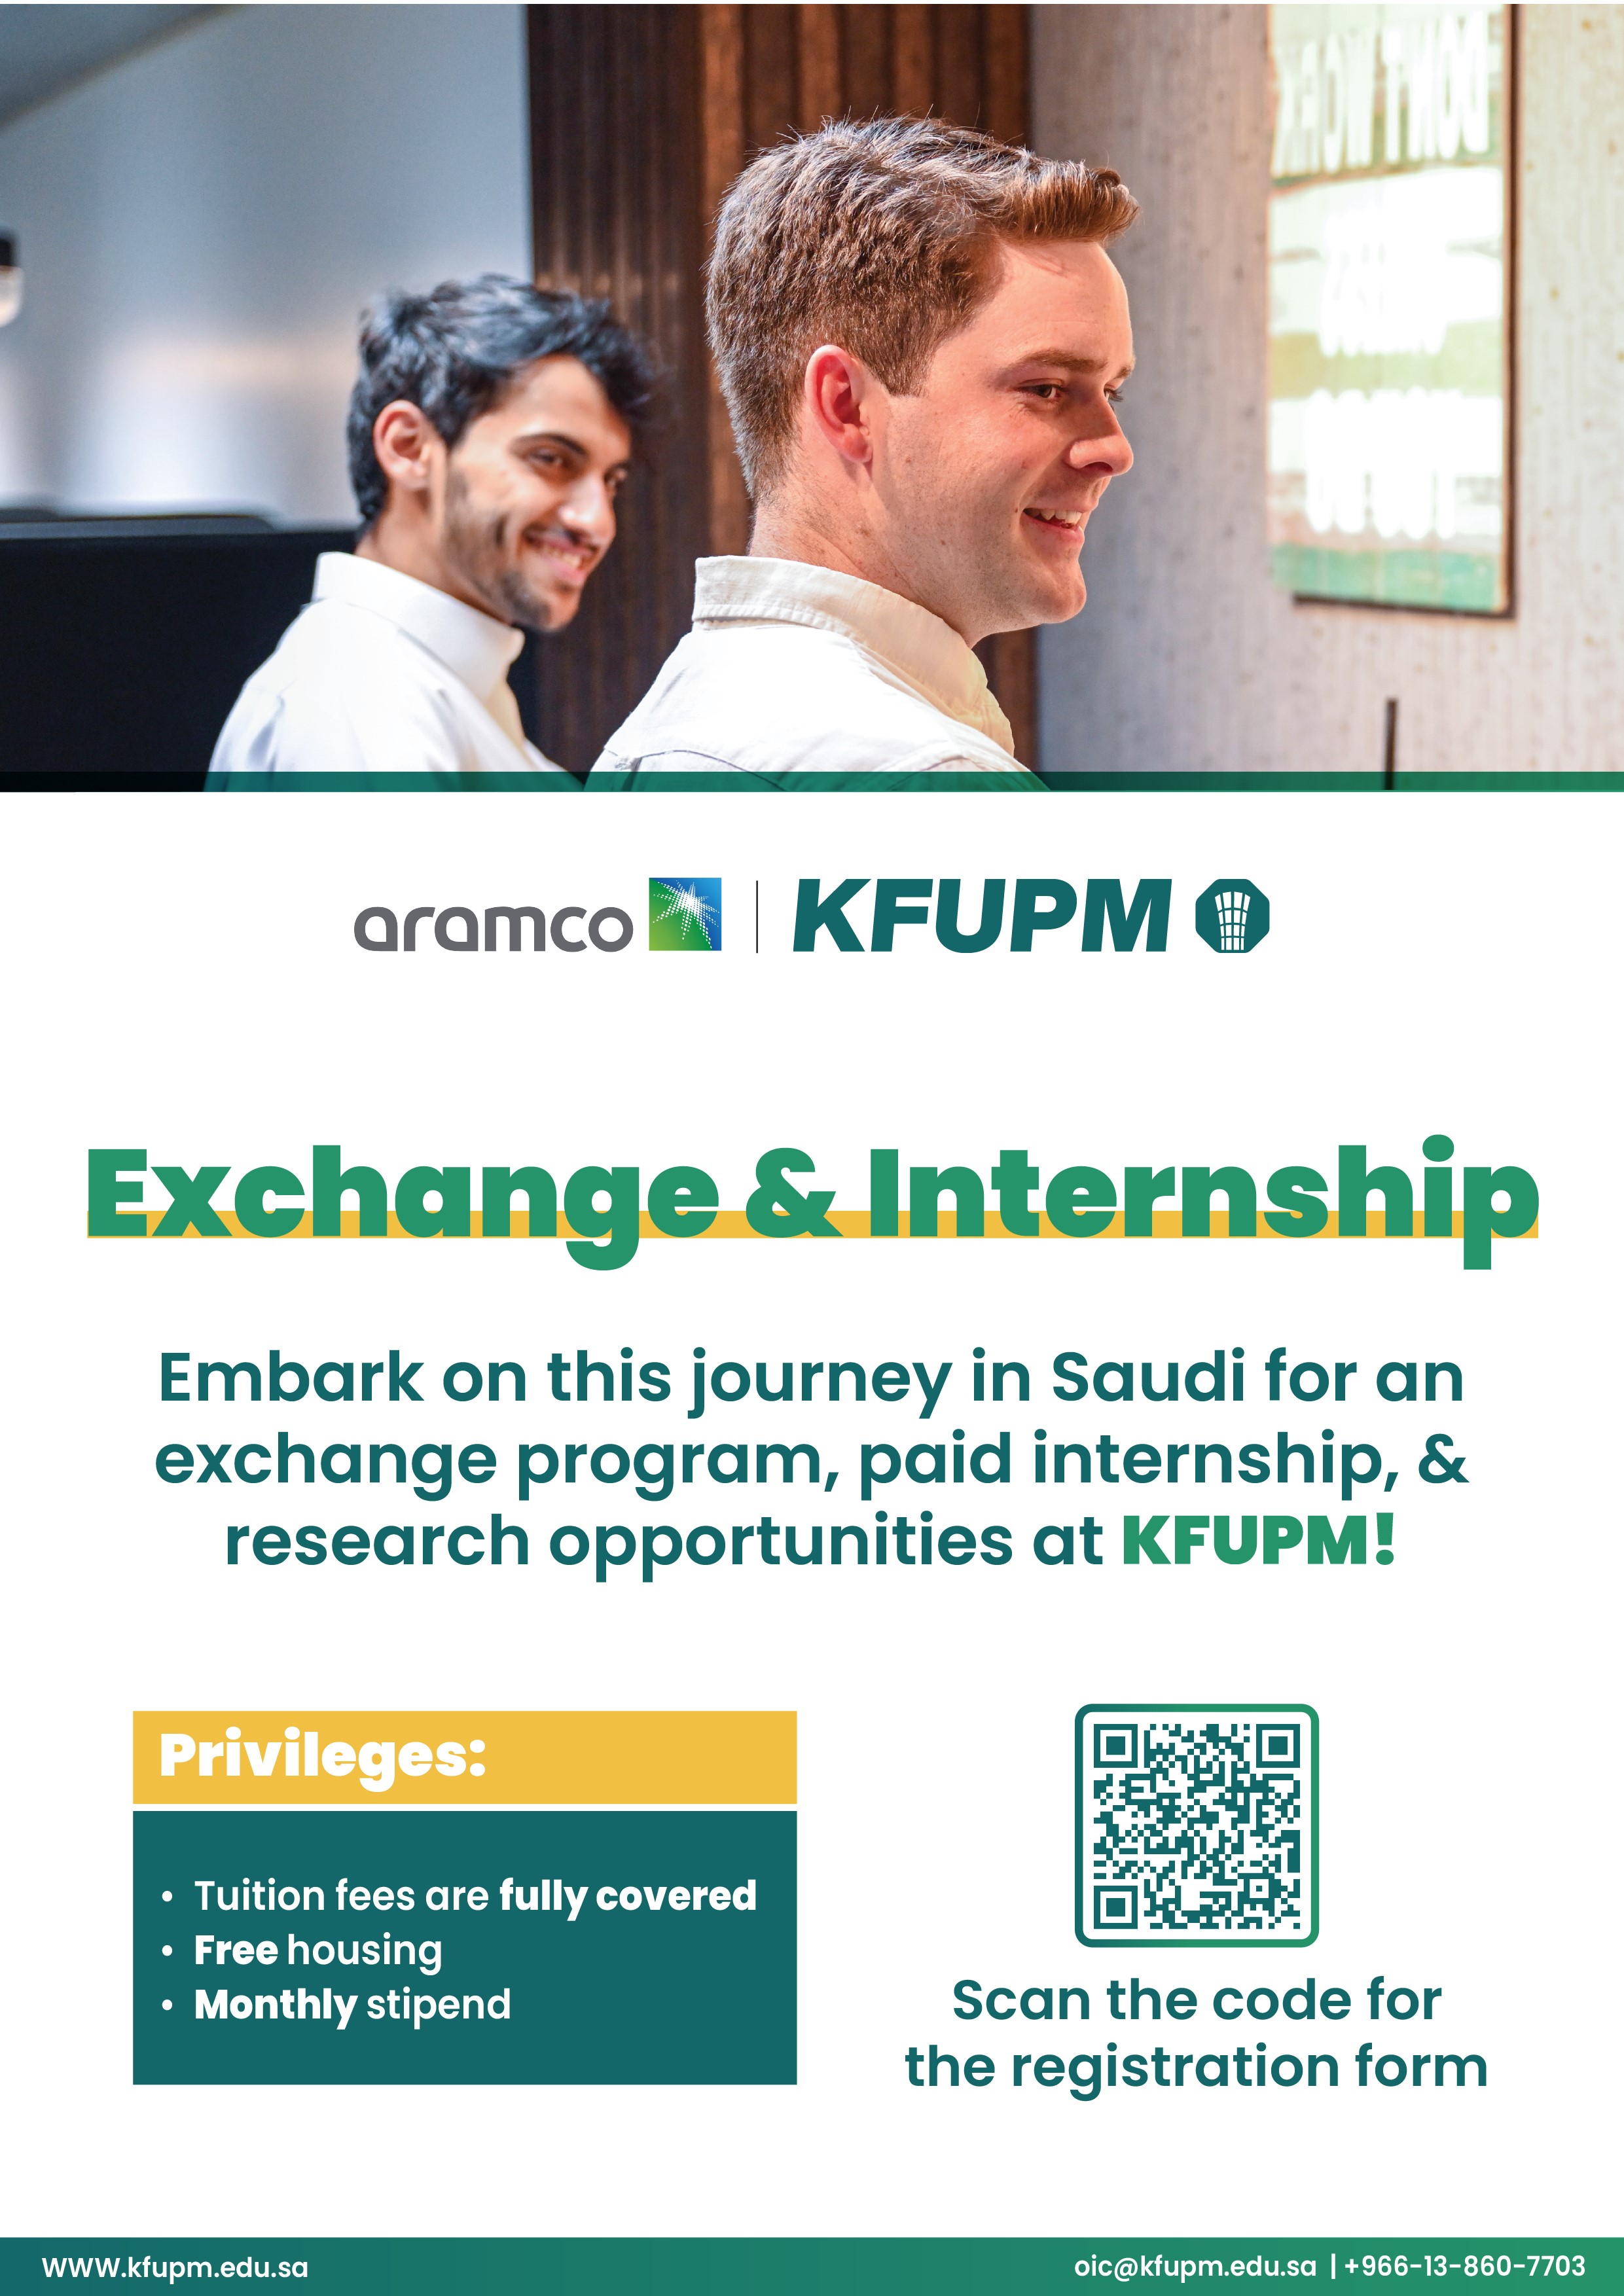  Undergraduate visiting student program at KFUPM